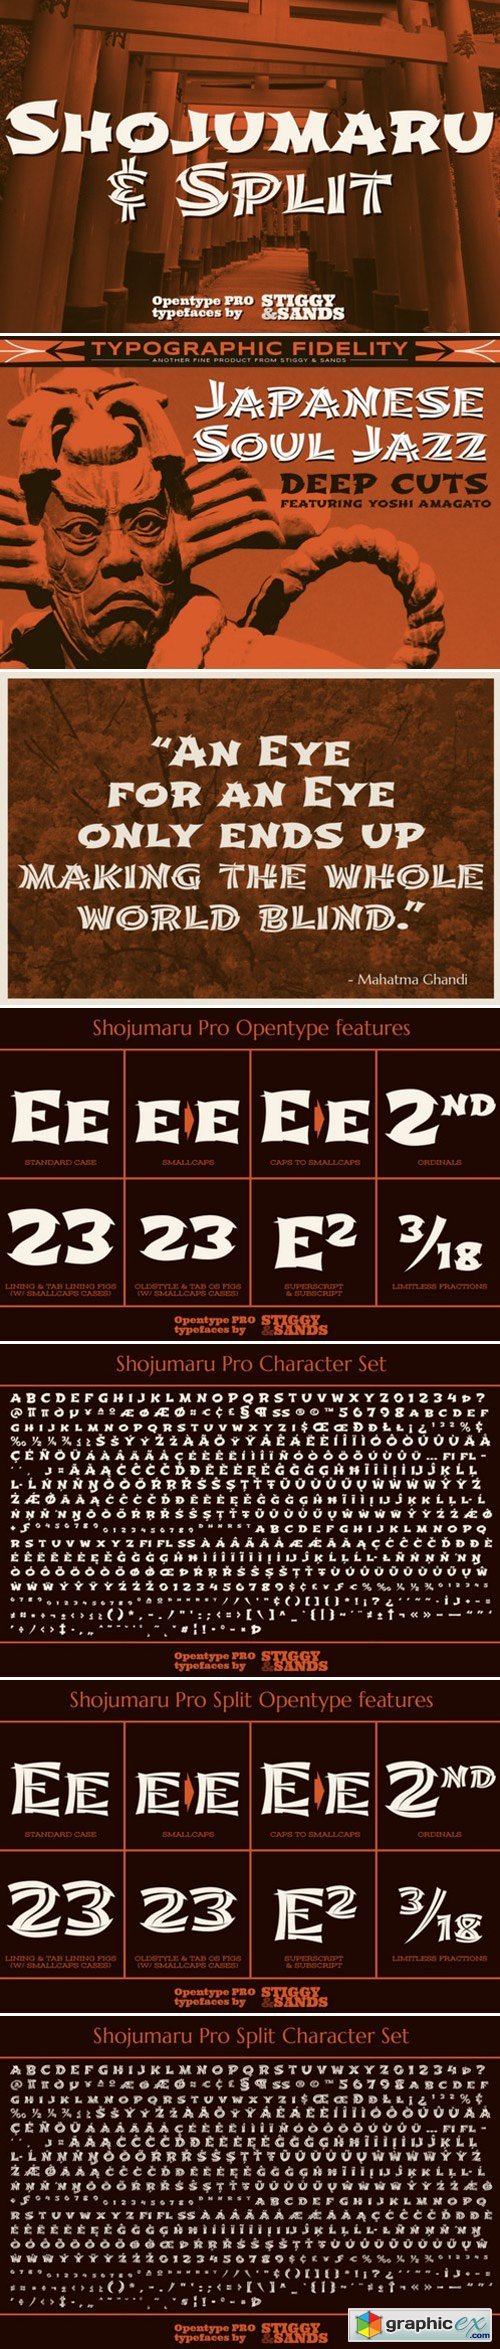 Shojumaru Pro Display Fonts